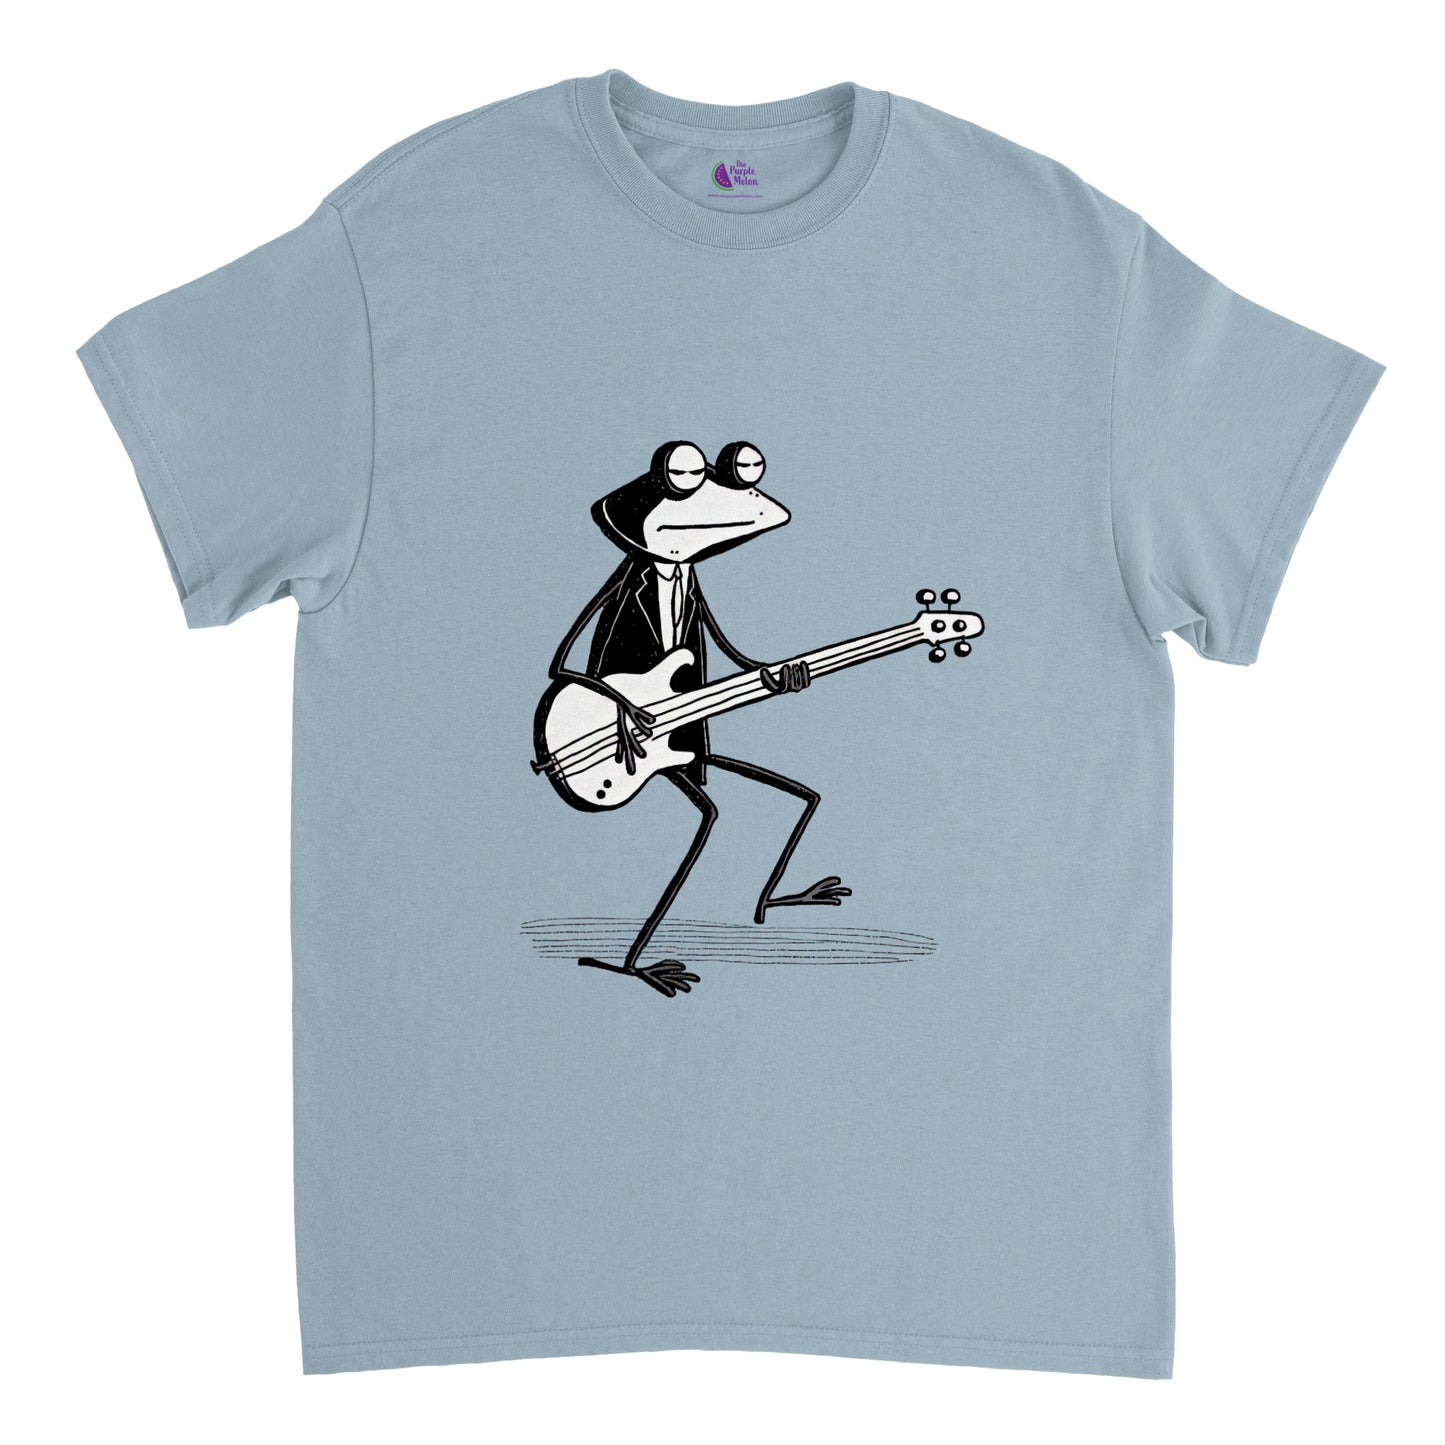 Light Blue t-shirt with a frog playing a bass guitar print